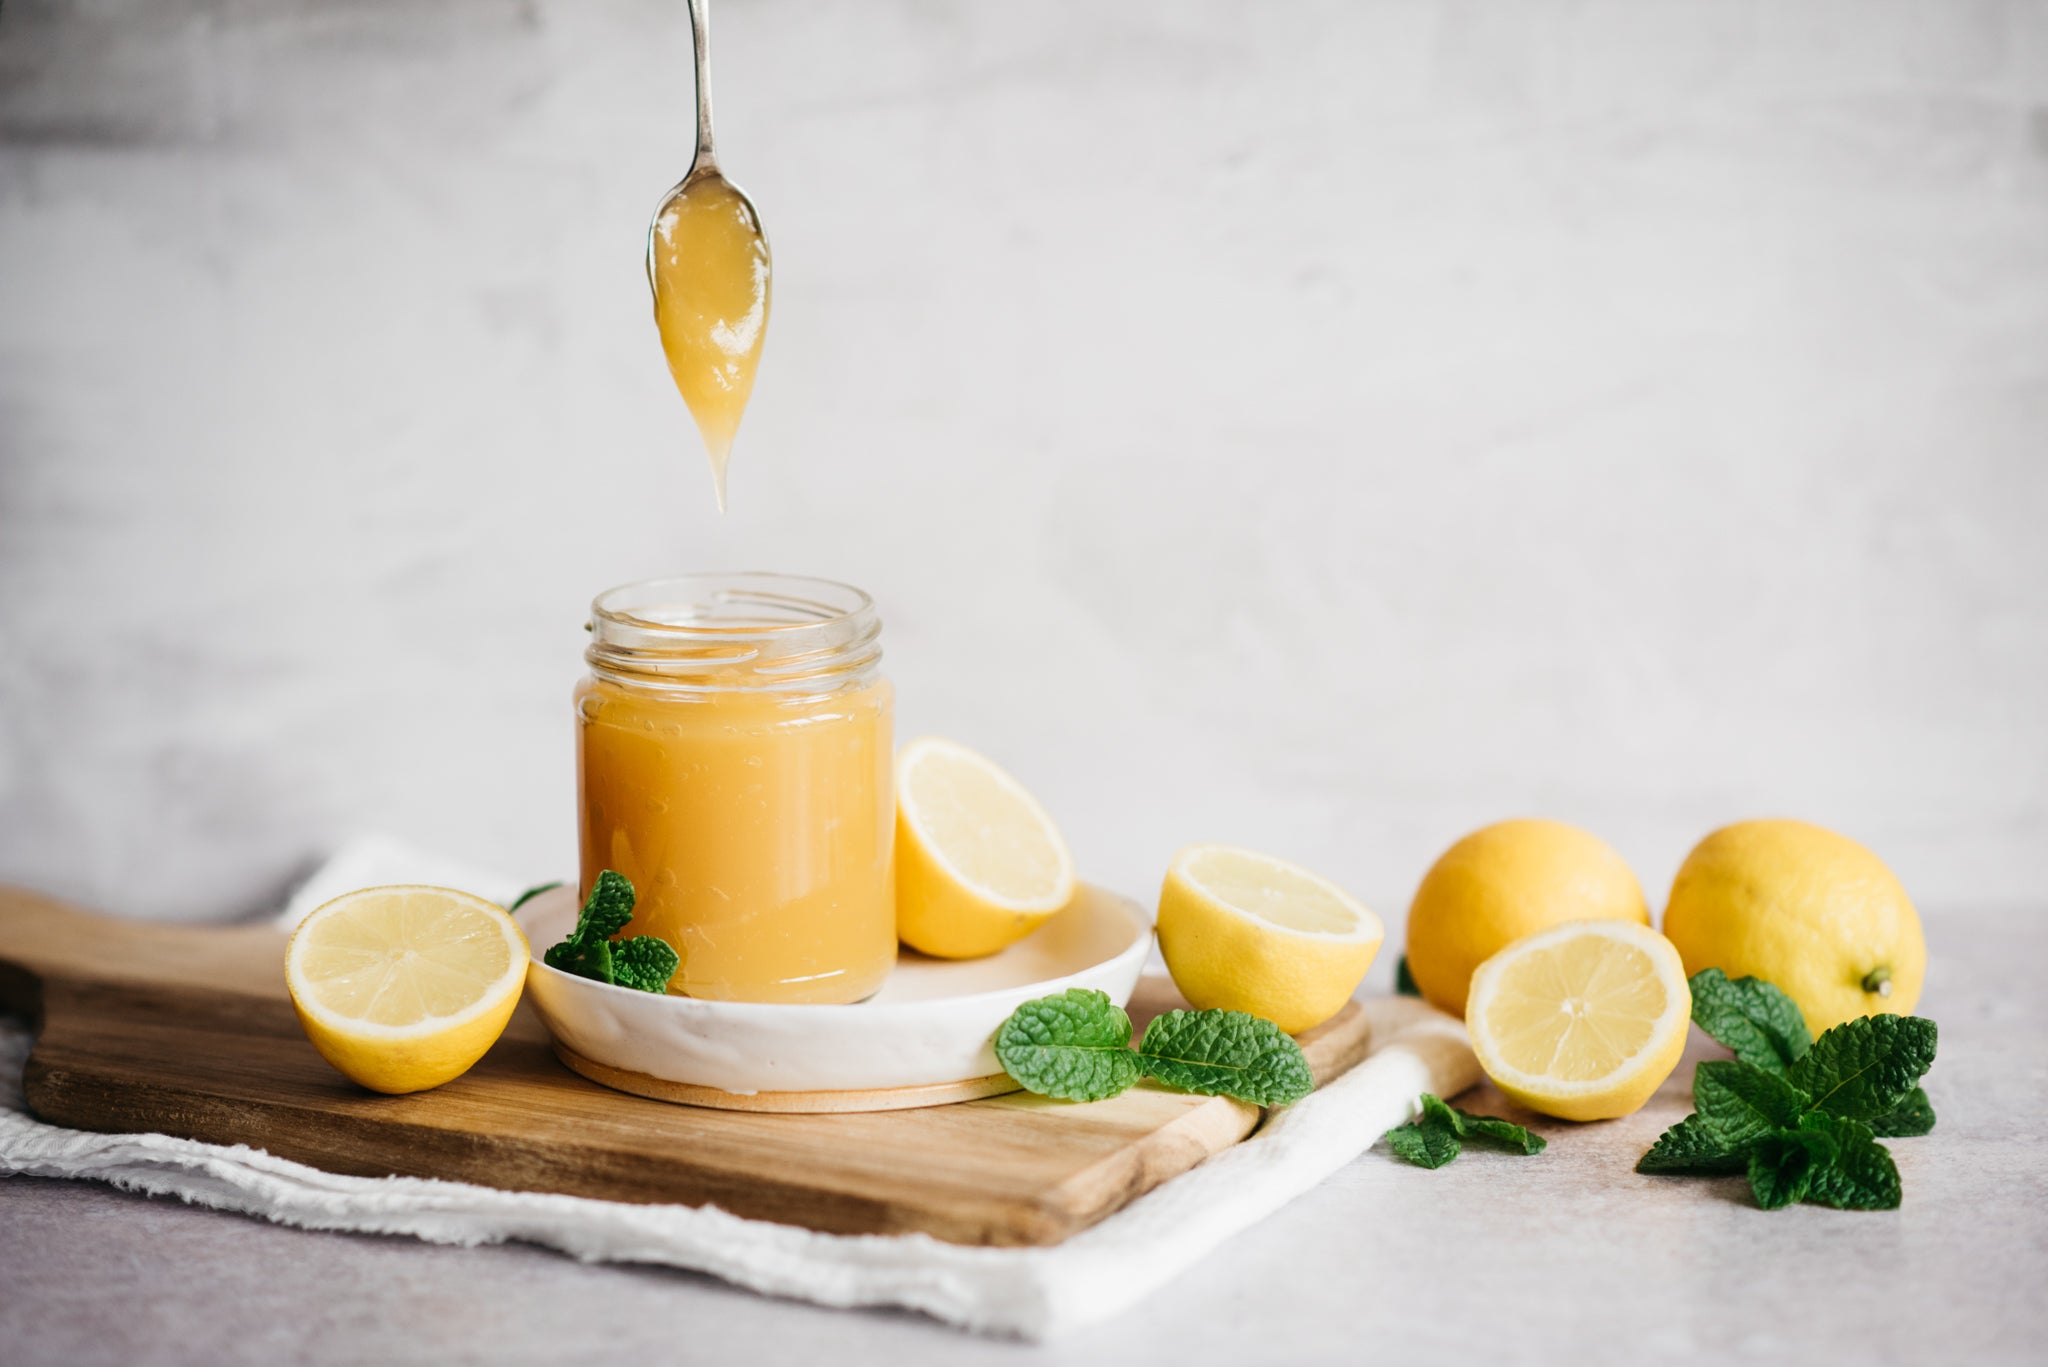 Lemon Curd in a jar next to lemons